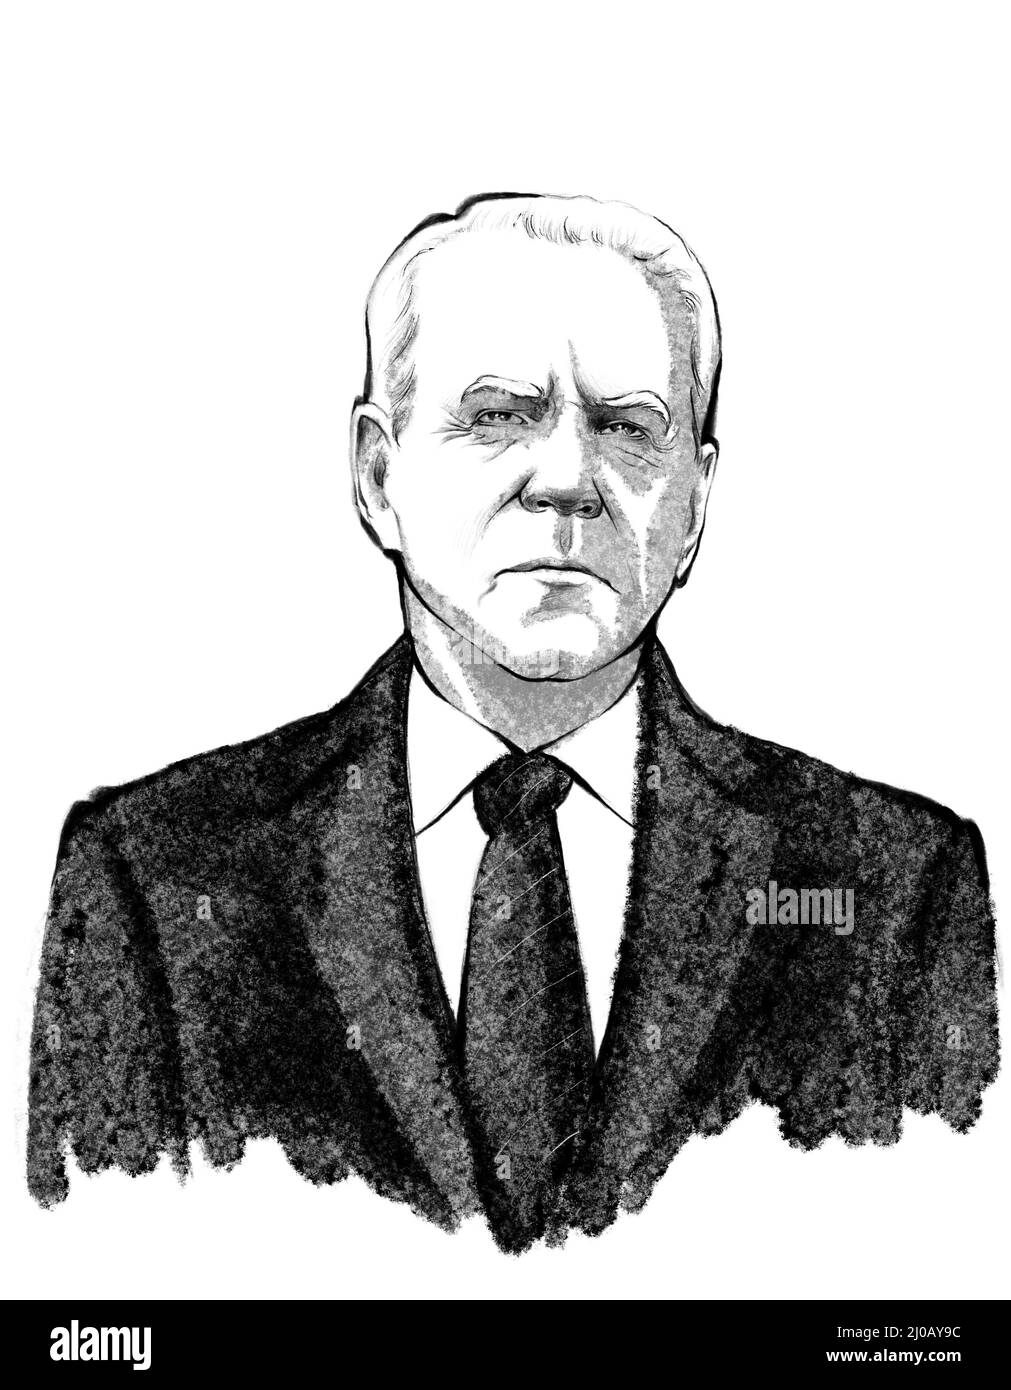 President of the USA Joe Biden portrait illustration. American president illustration. Stock Photo